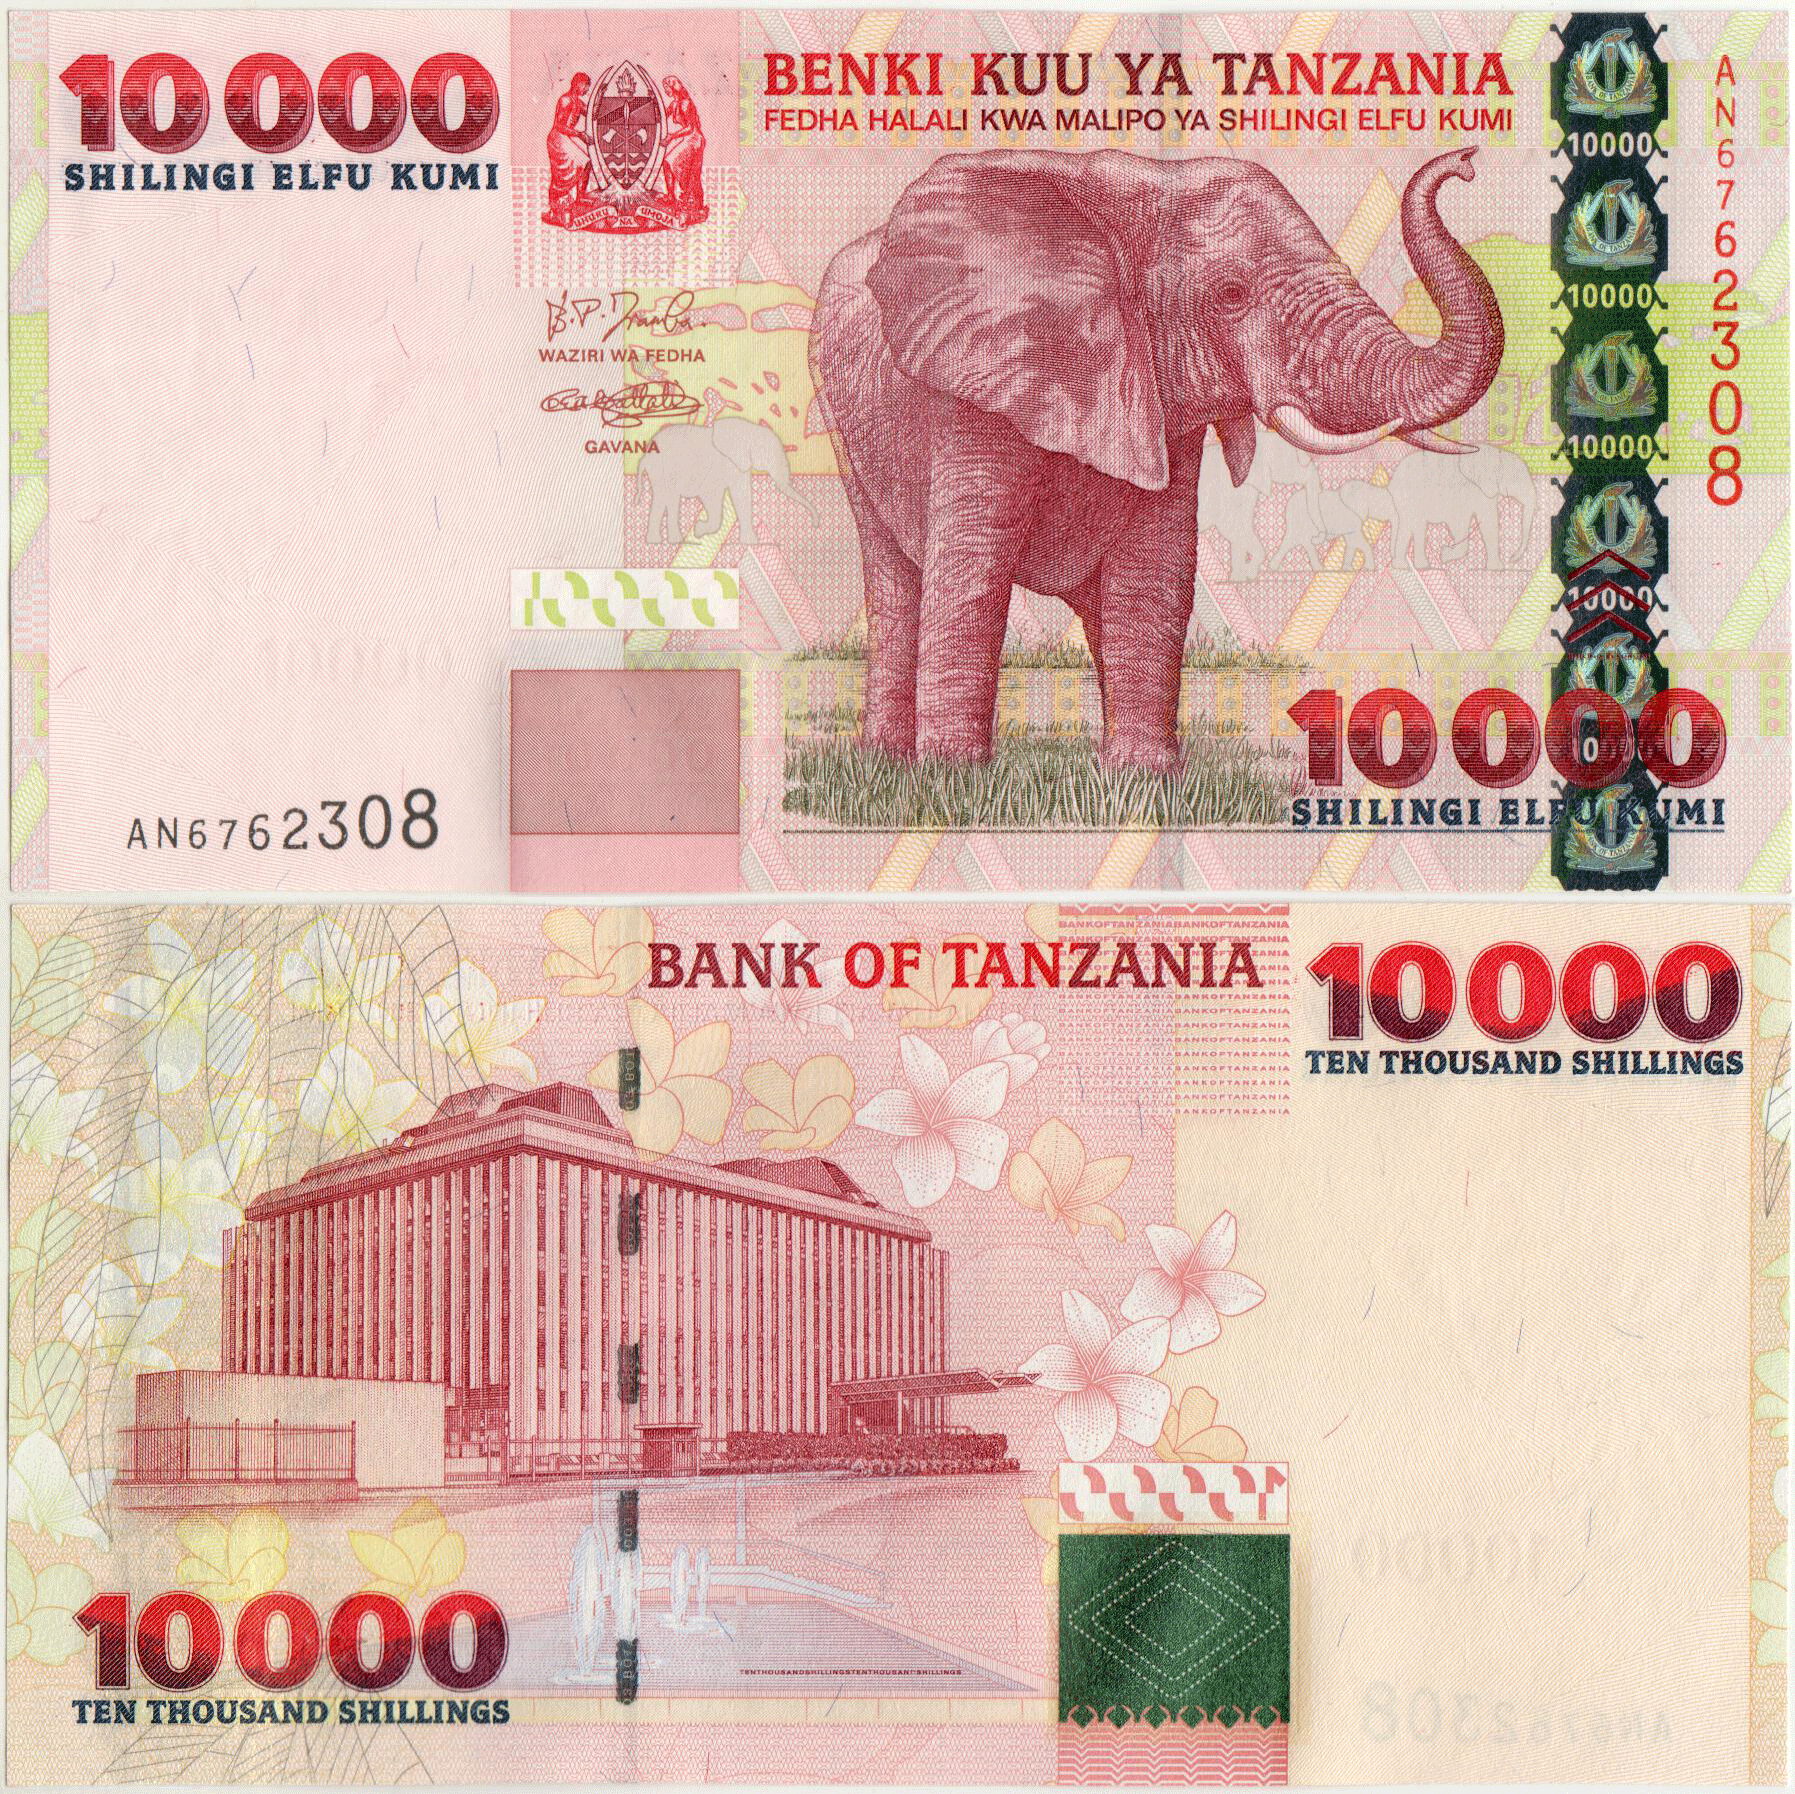 Tanzania 10000 Shillings 10,000 2003 P-39 Elephant Unc